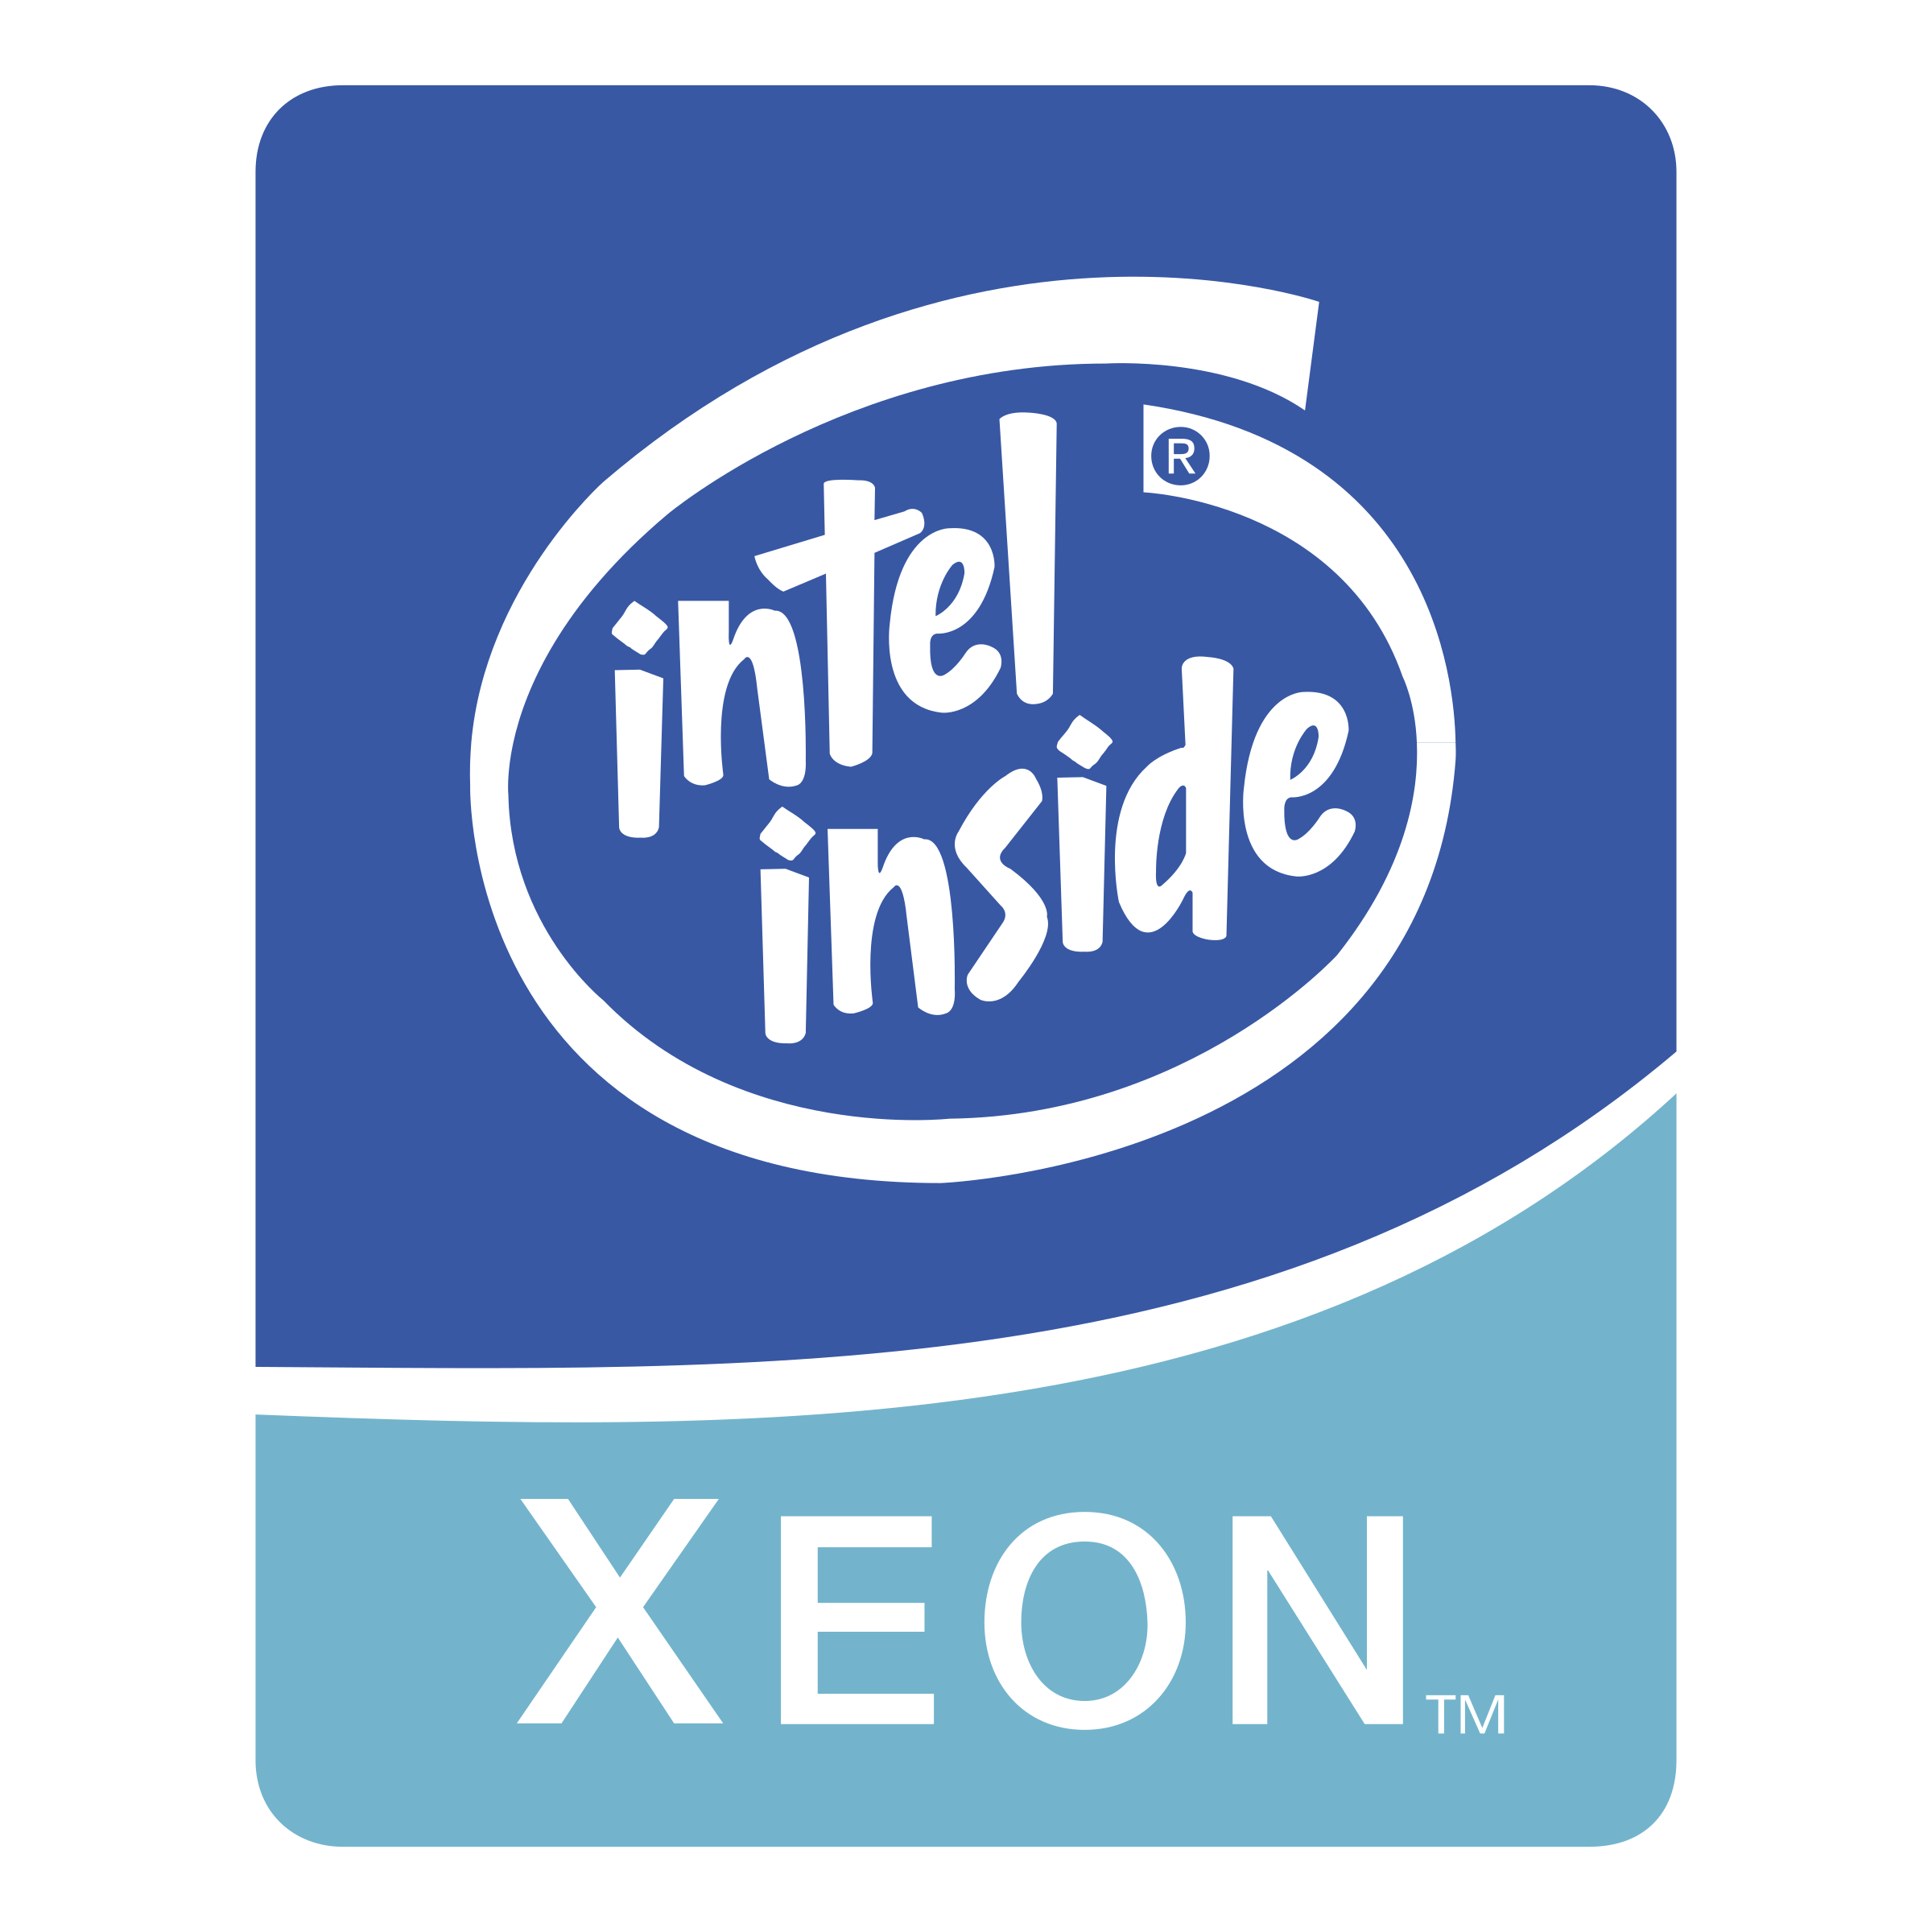 Processor Logo - Xeon Processor Logo PNG Transparent & SVG Vector - Freebie Supply